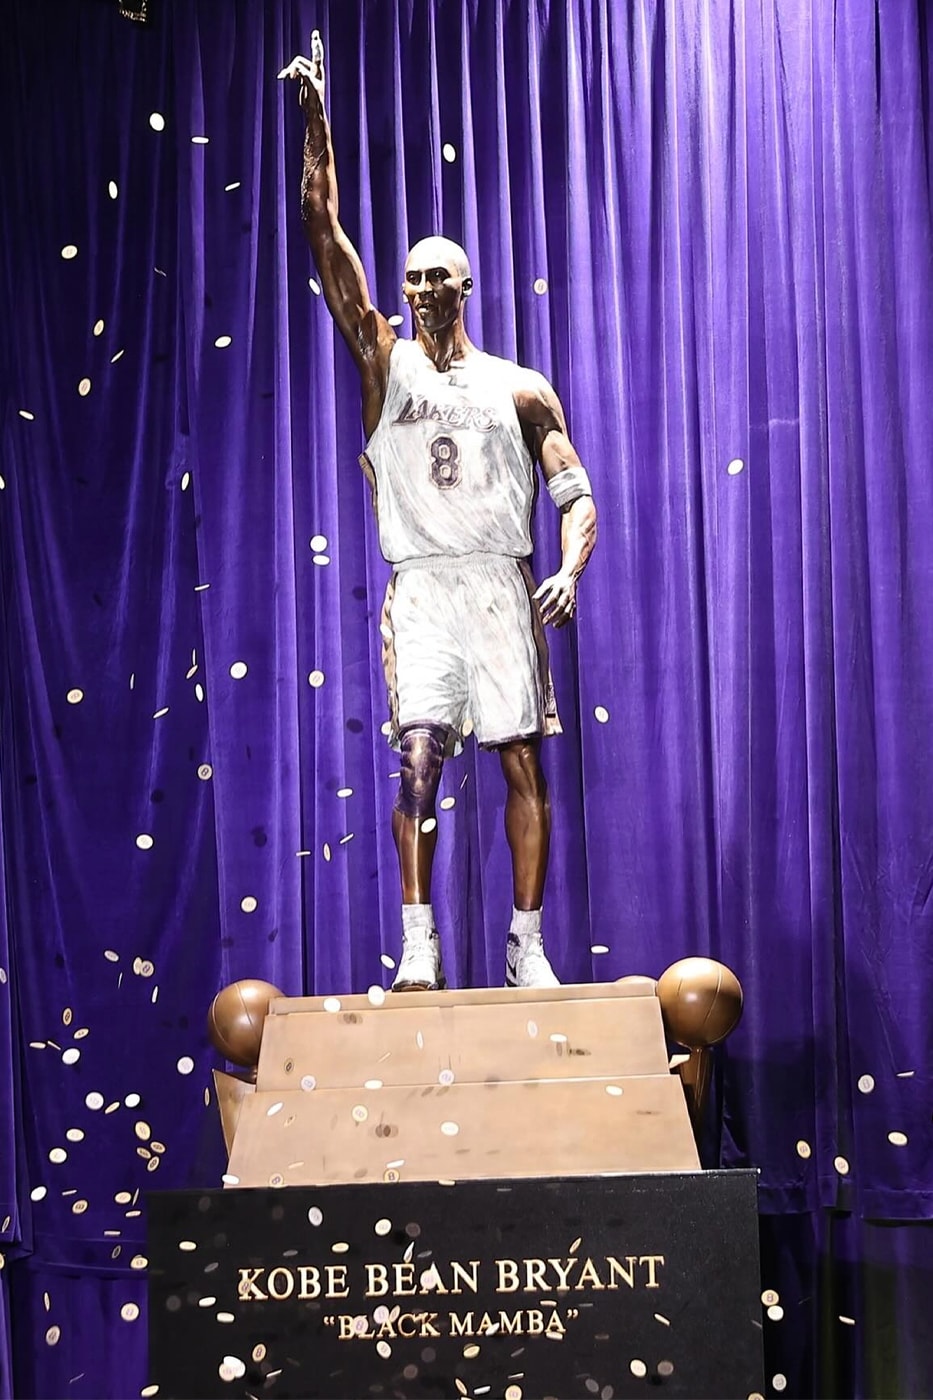 Los Angeles Lakers Reveal 19-Foot Kobe Bryant Statue black mamba 81 point game toronto raptors immortalized ceremony nba basketball legend goat